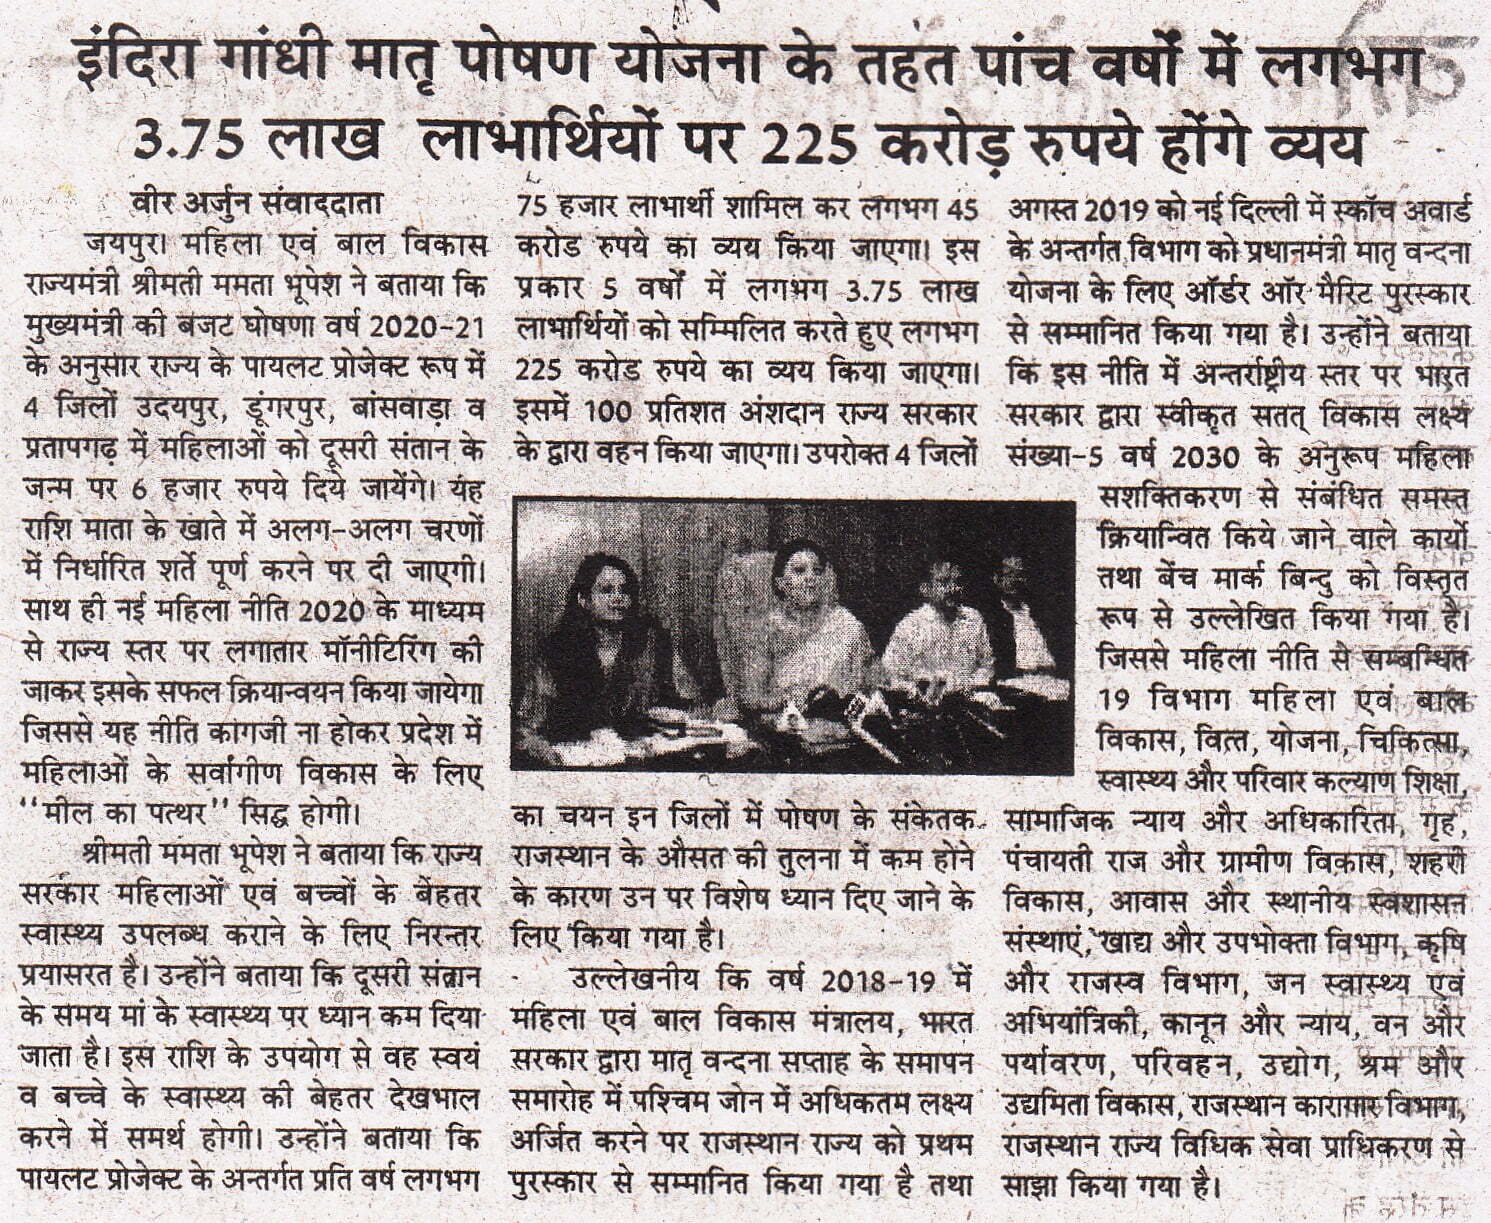 IGMPY Announcement in Veer Arjun